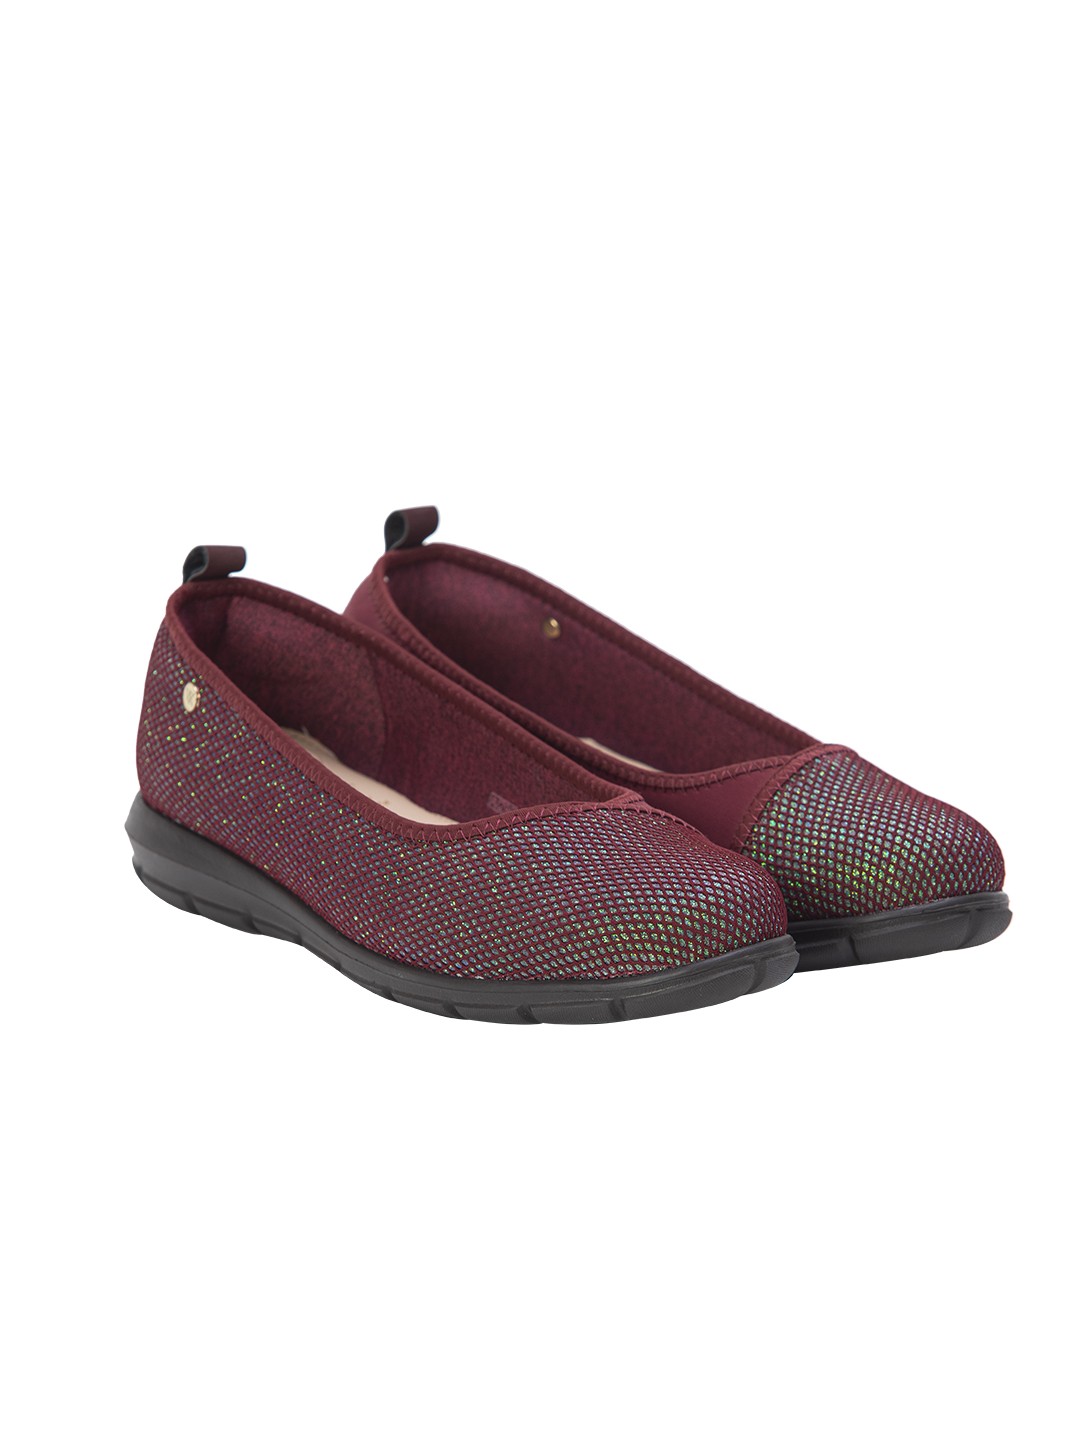 Buy Von Wellx Germany Comfort Pace Mehroon Casual Shoes Online in Bhubaneswar